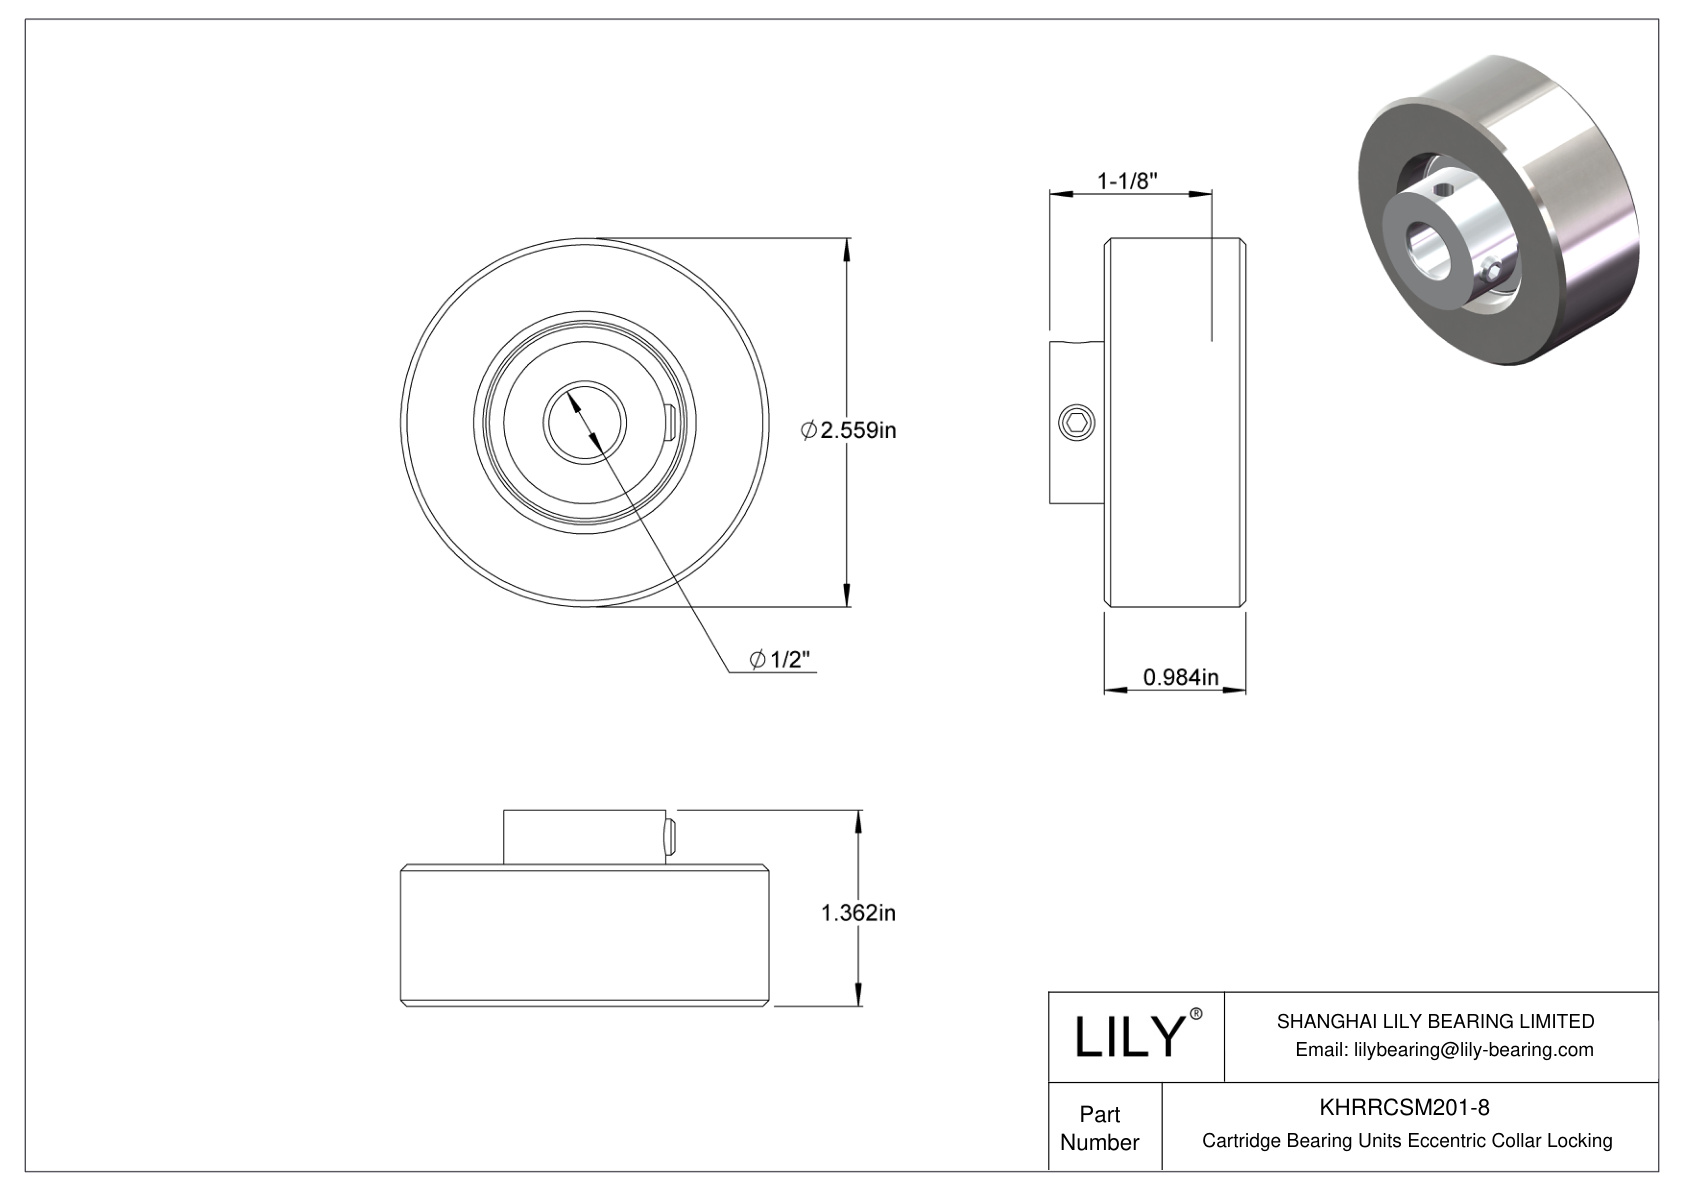 KHRRCSM201-8 Cartridge Bearing Units Eccentric Collar Locking cad drawing